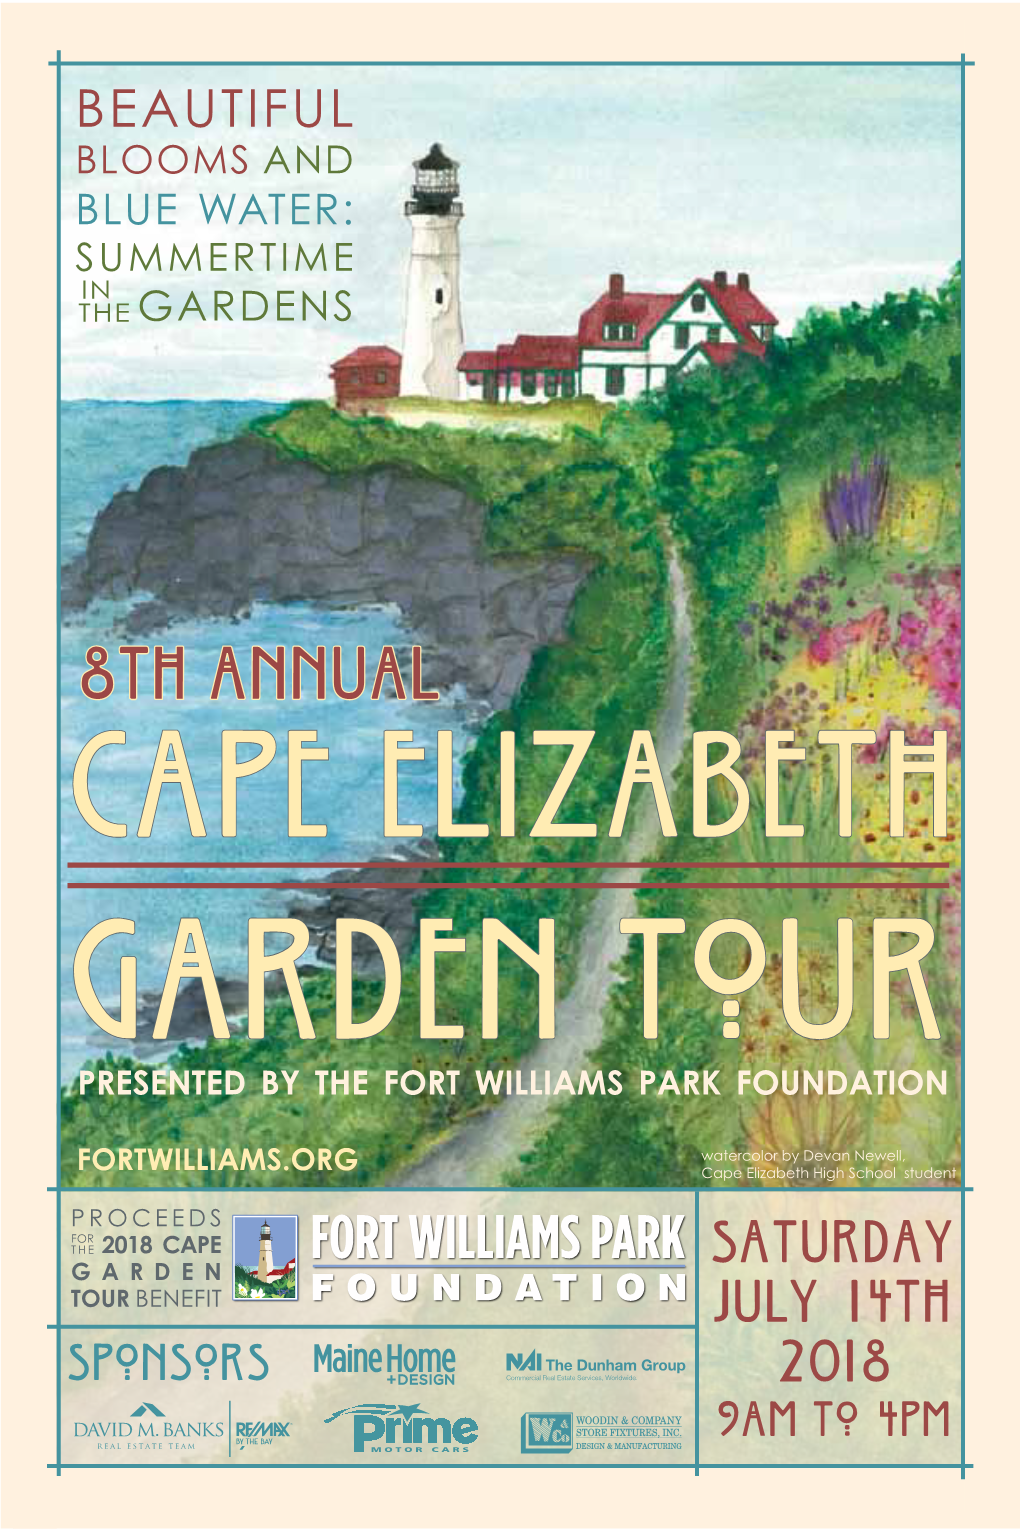 Cape Elizabeth Garden Tour Presented by the Fort Williams Park Foundation